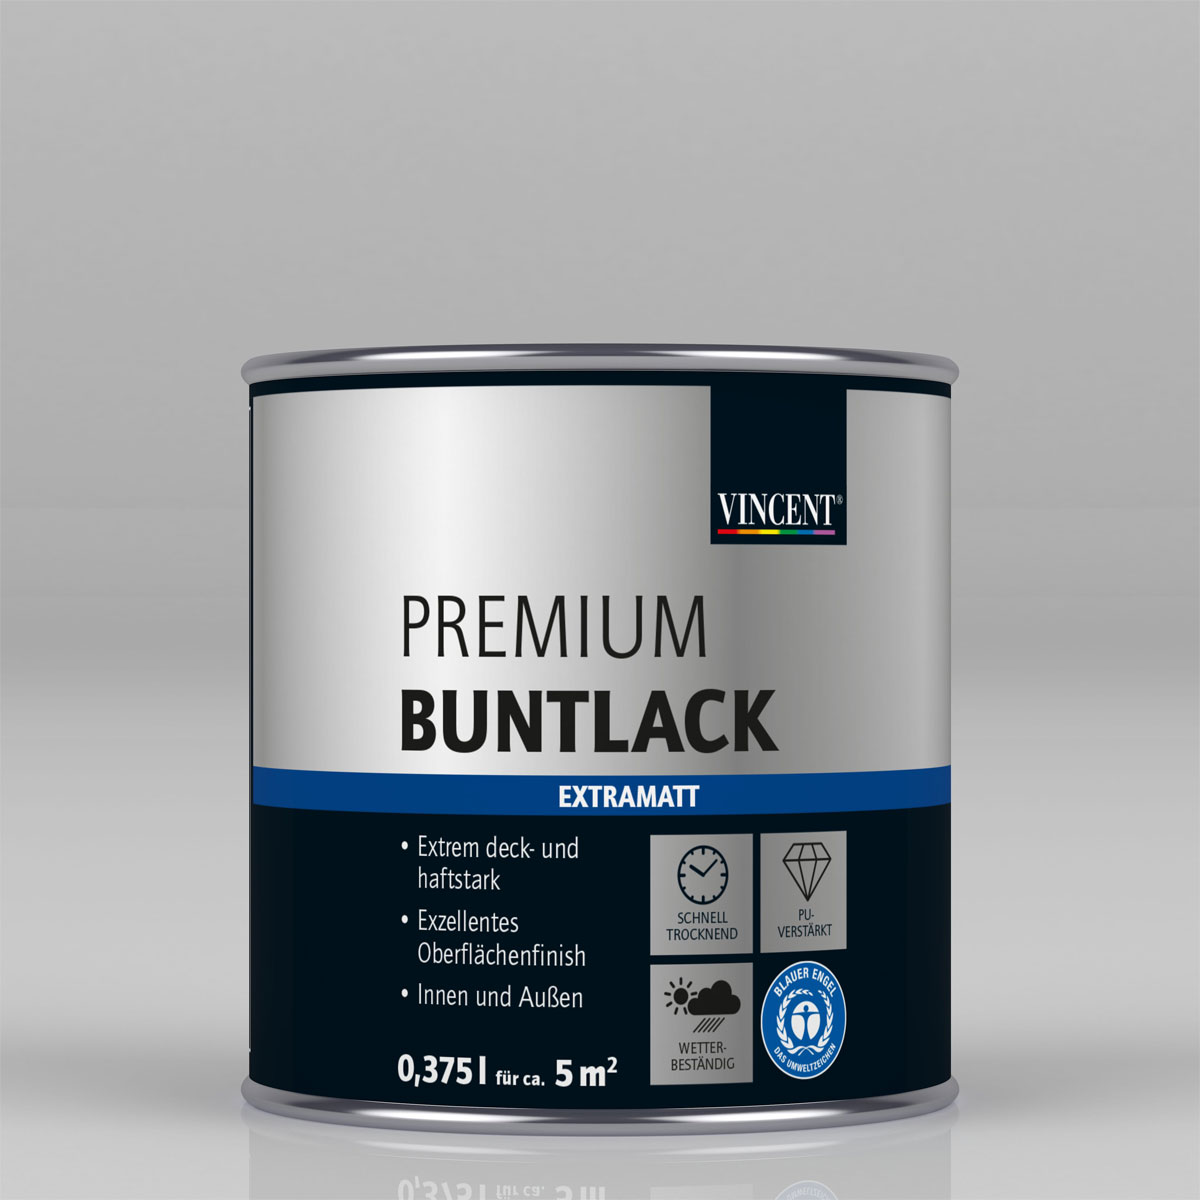 Premium Buntlack „silber metallic“ extramatt, 375 ml